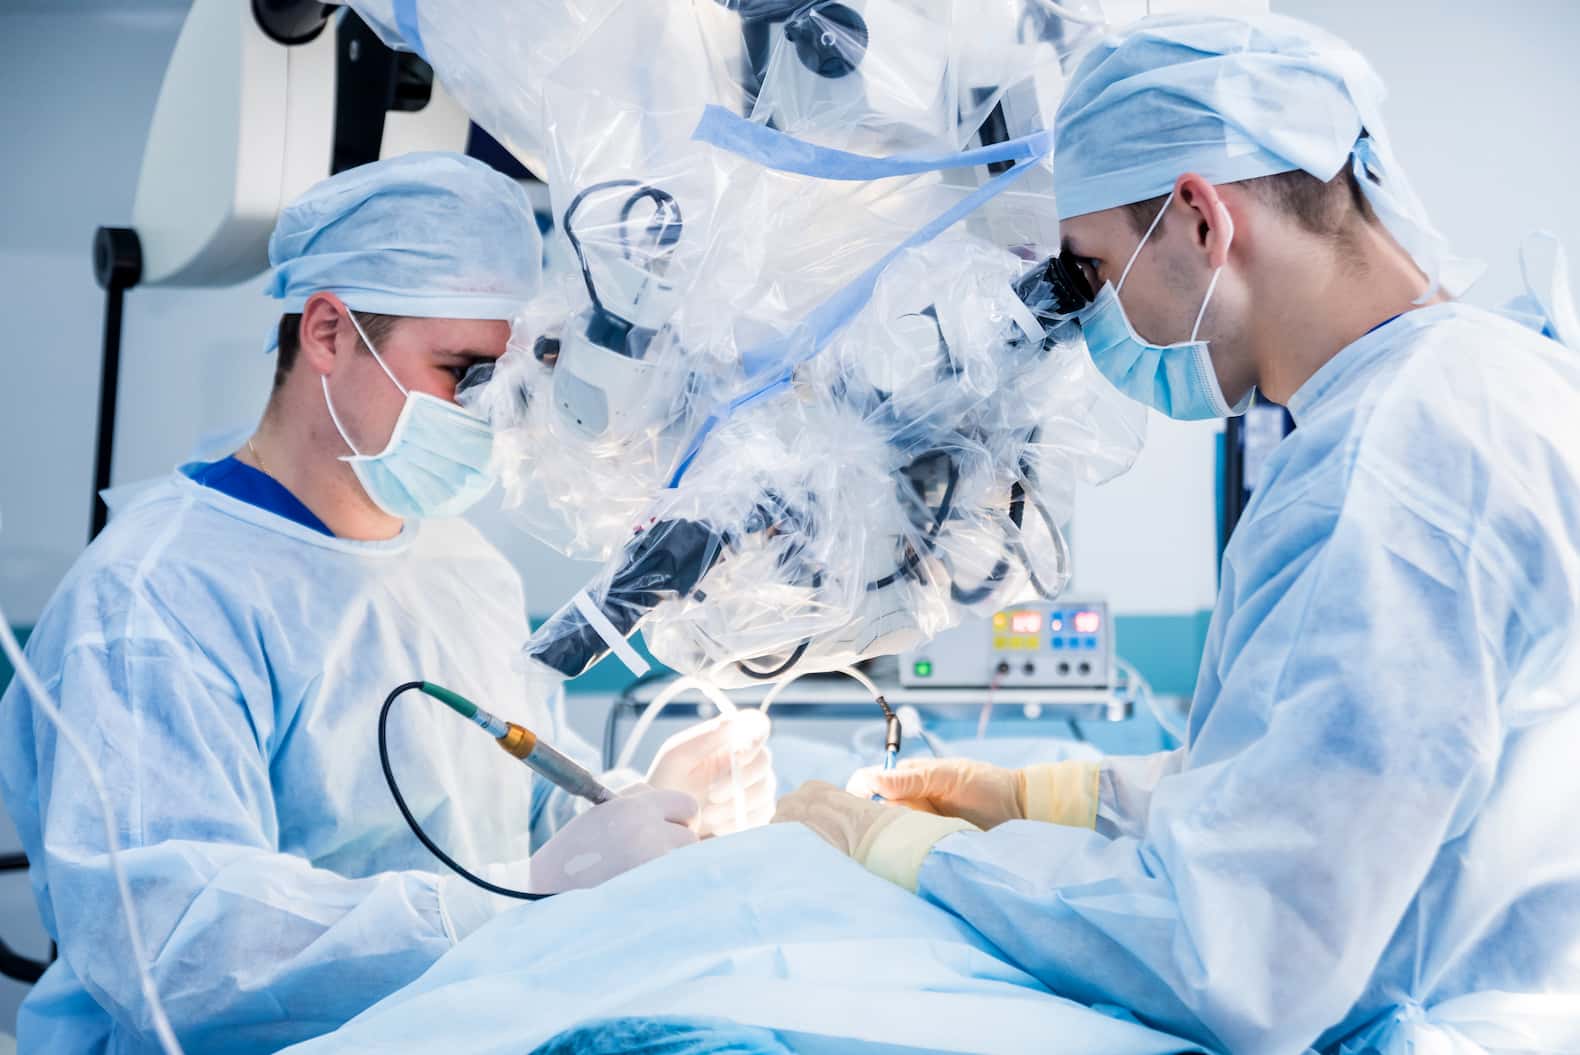 Turkiye deformity correction surgery